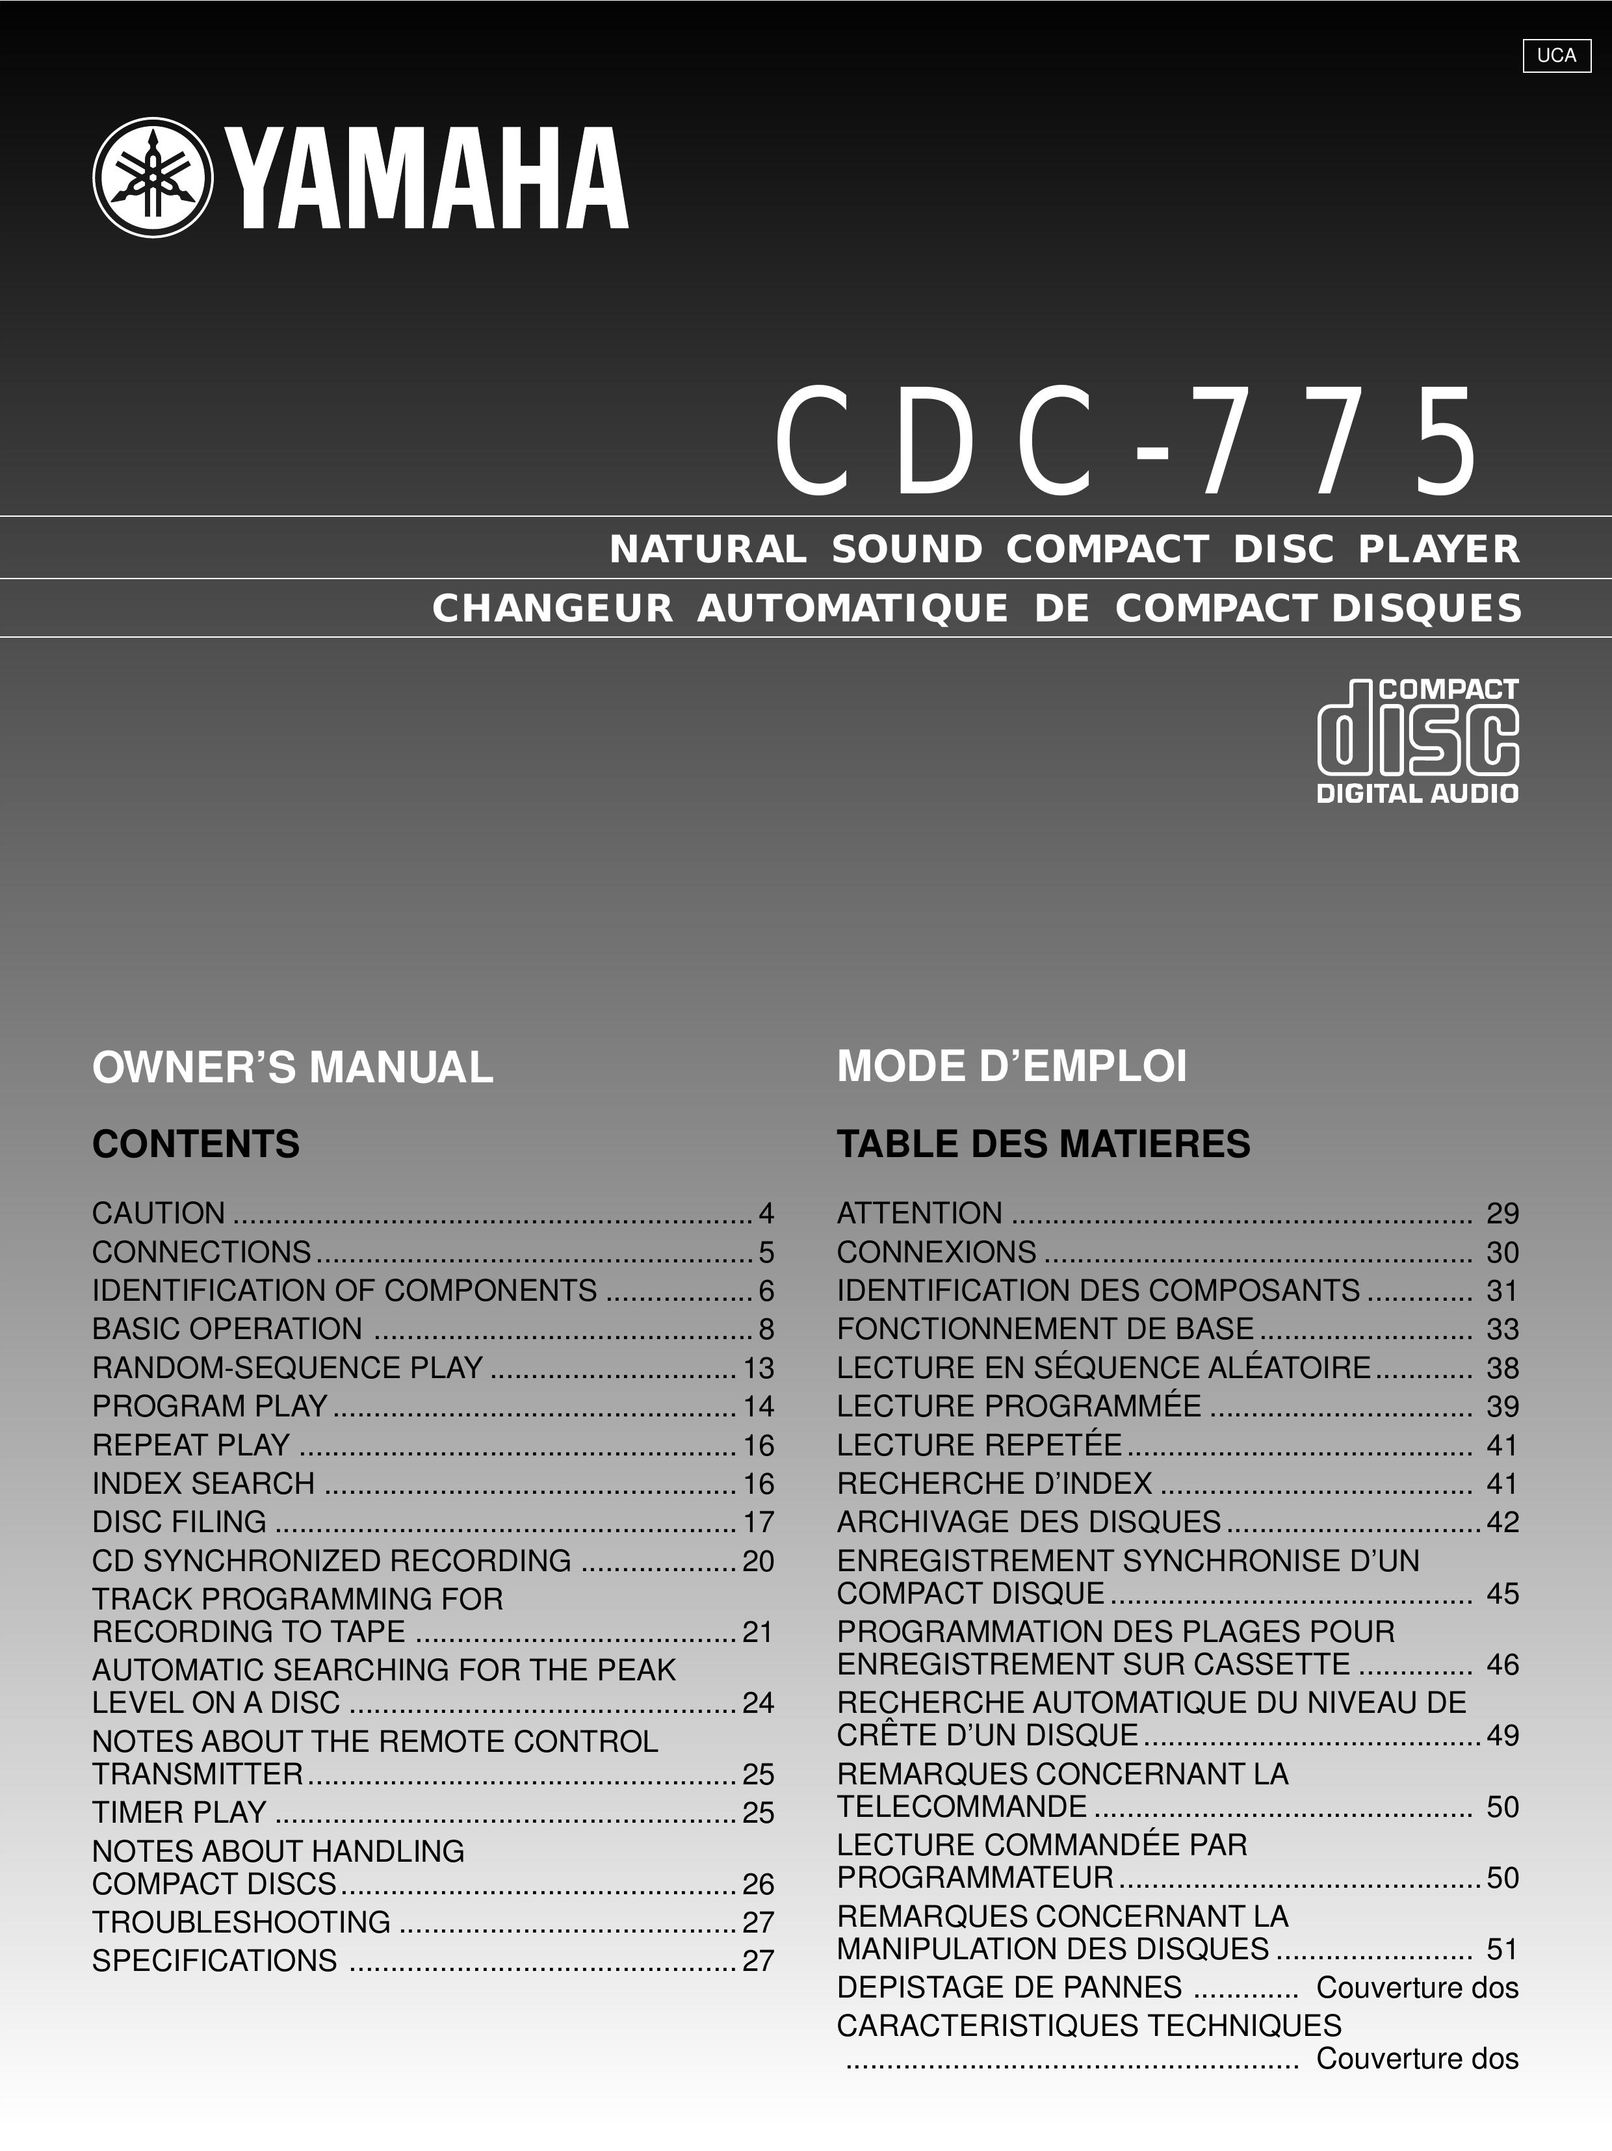 Yamaha CDC-775 Stereo System User Manual